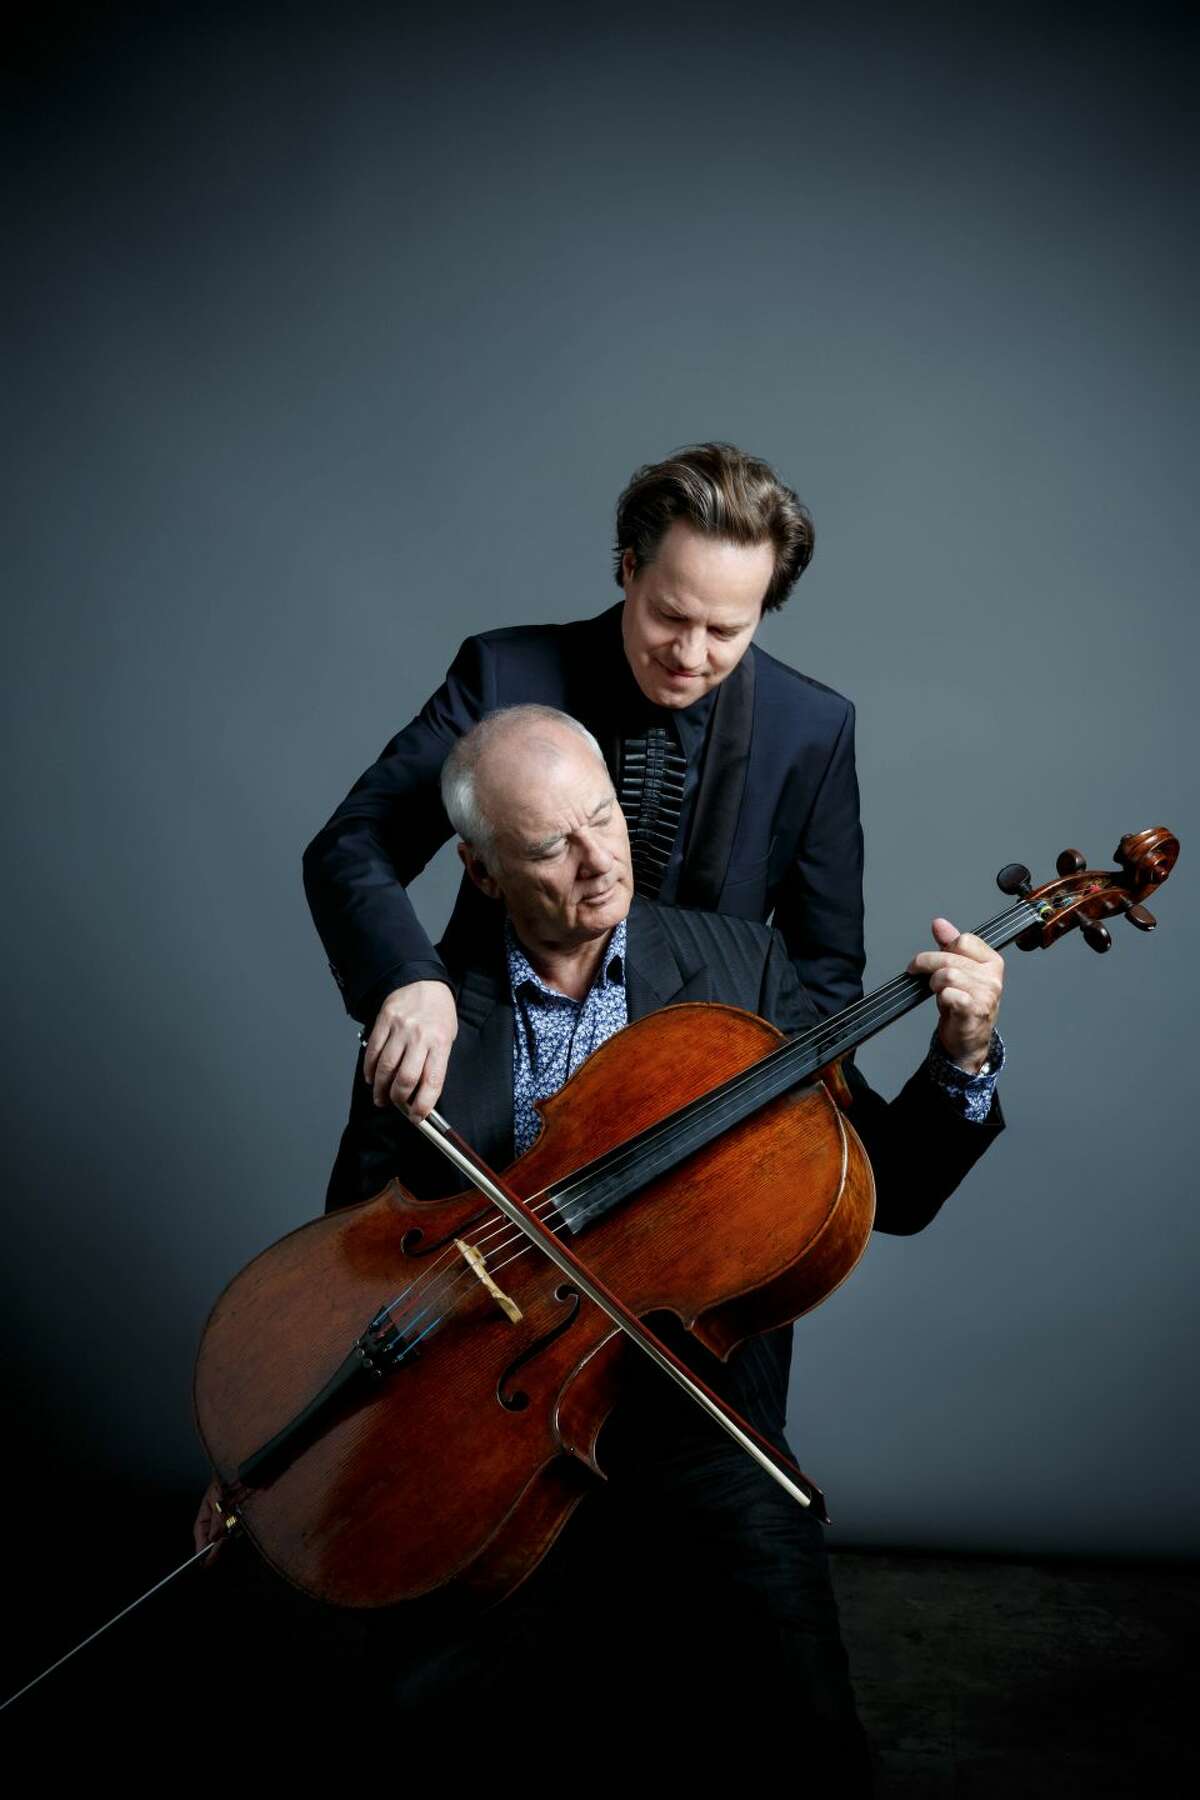 Bill Murray and cellist Jan Vogler (image from newworldsmusic.com)